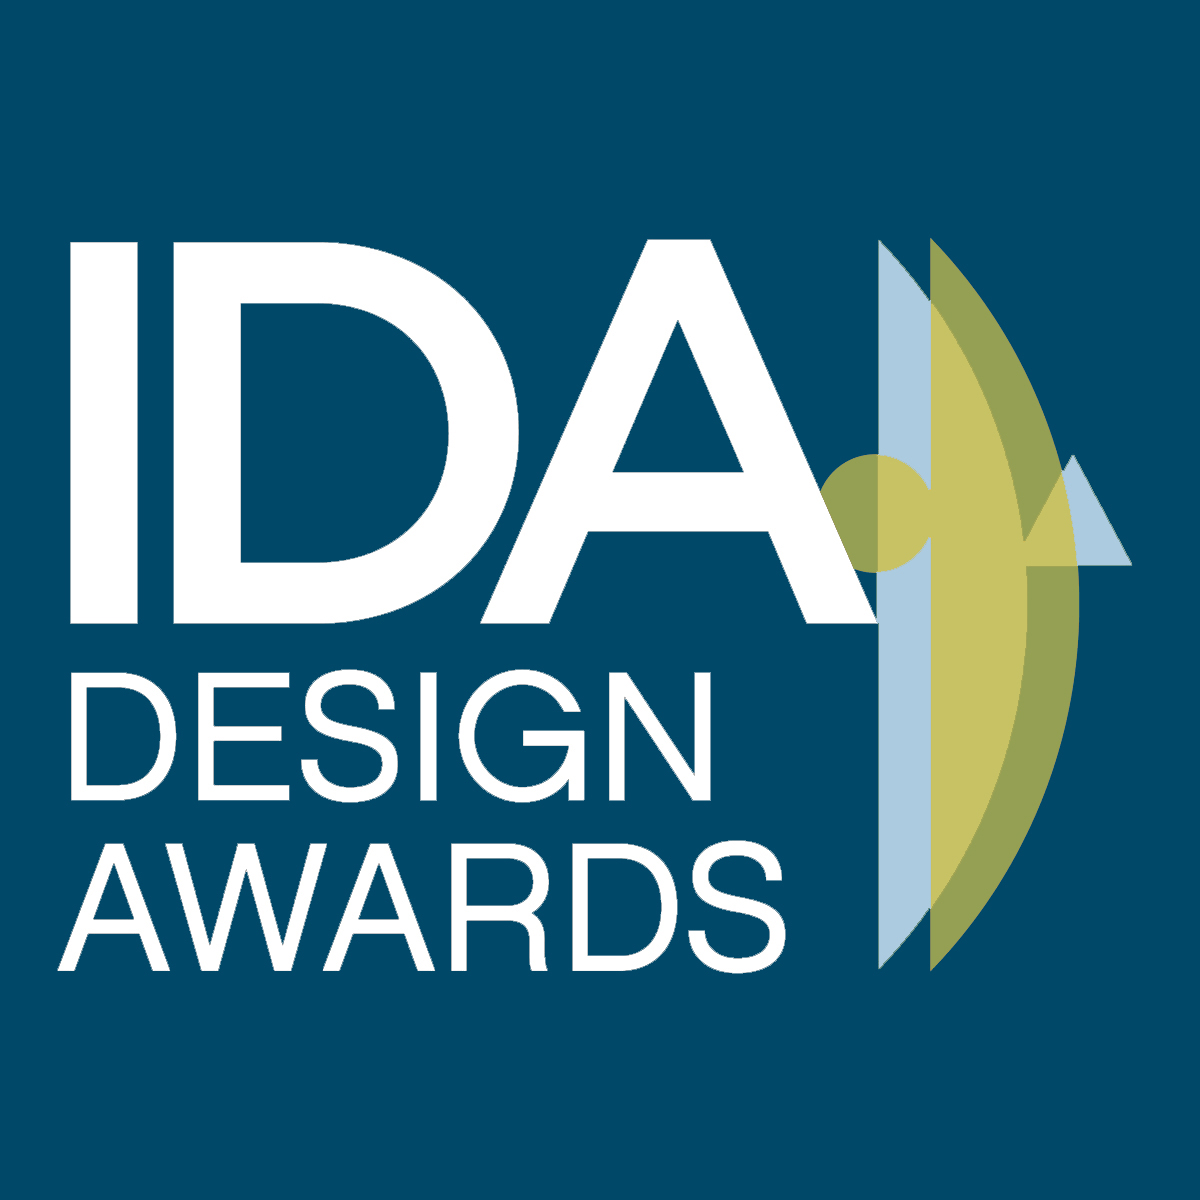 (IDA) International Design Awards